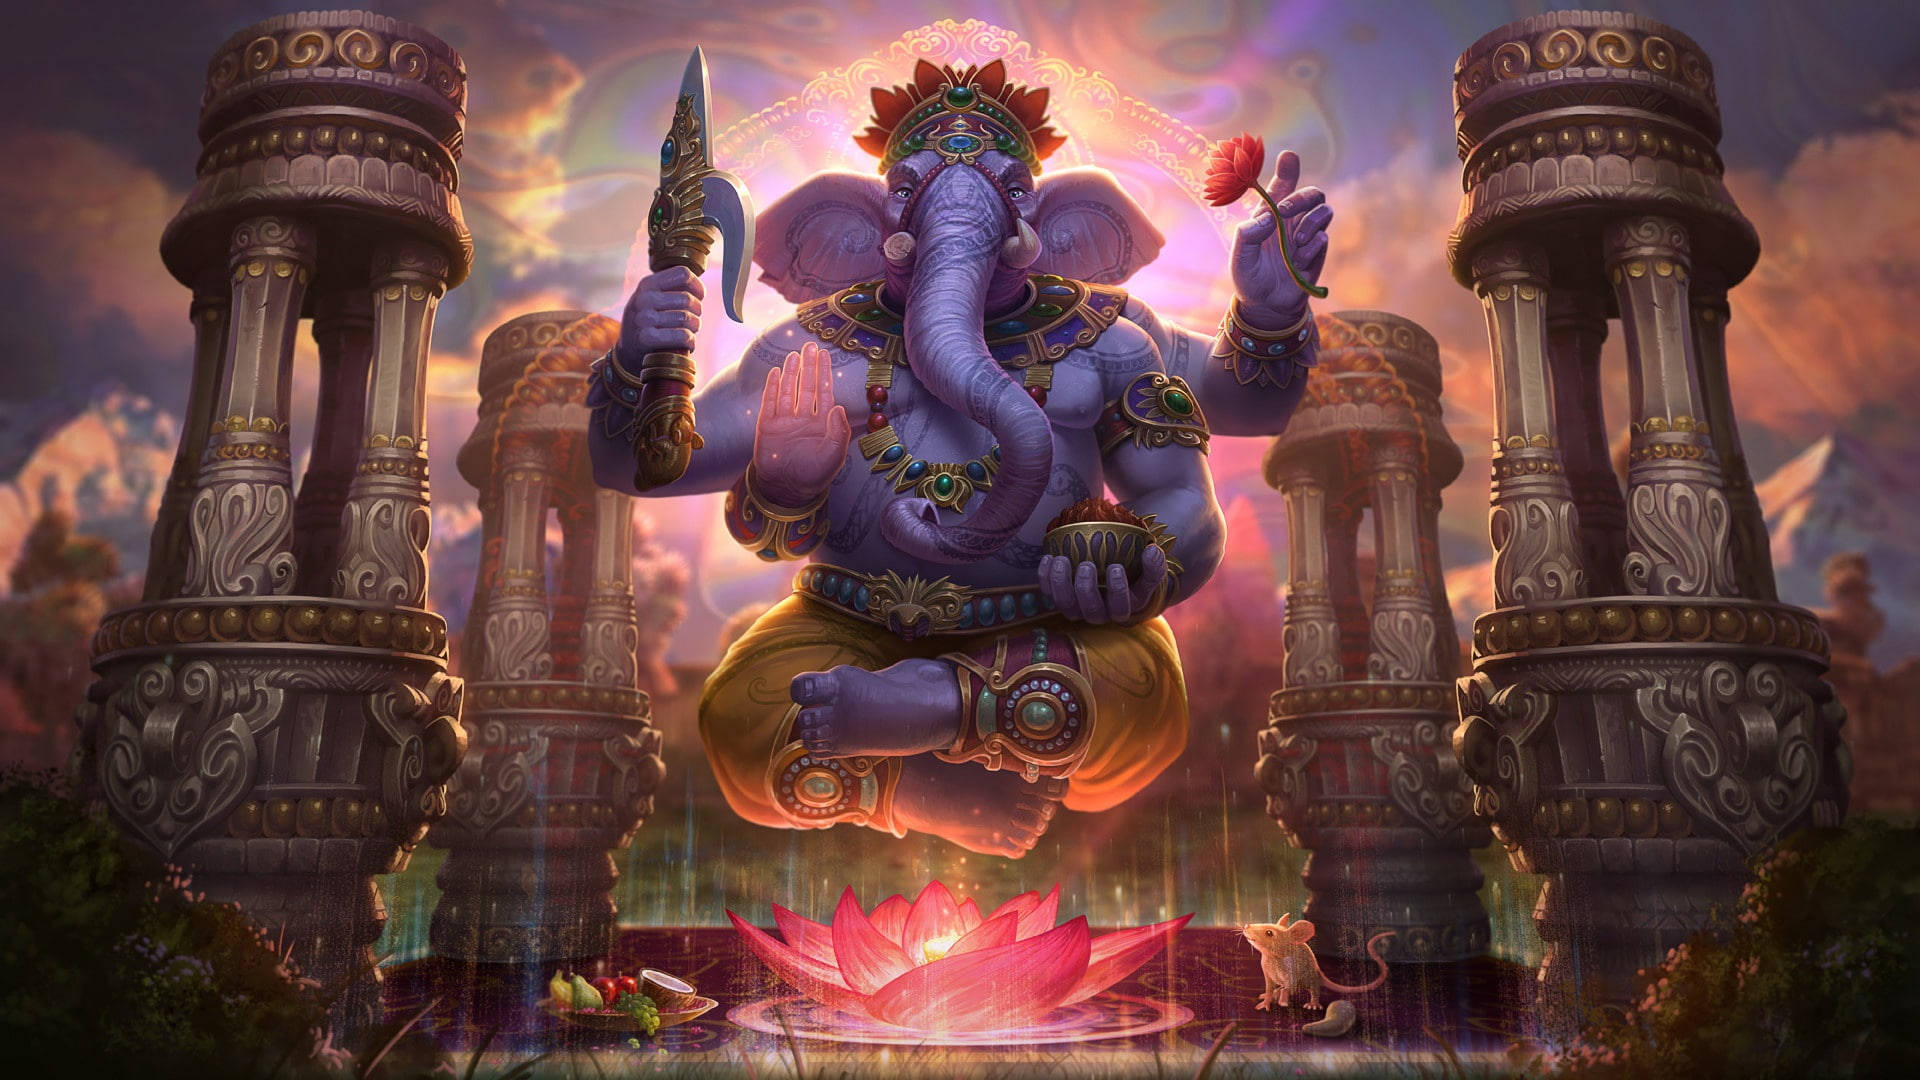 Free Ganesh Full Hd Wallpaper Downloads, [100+] Ganesh Full Hd Wallpapers  for FREE 